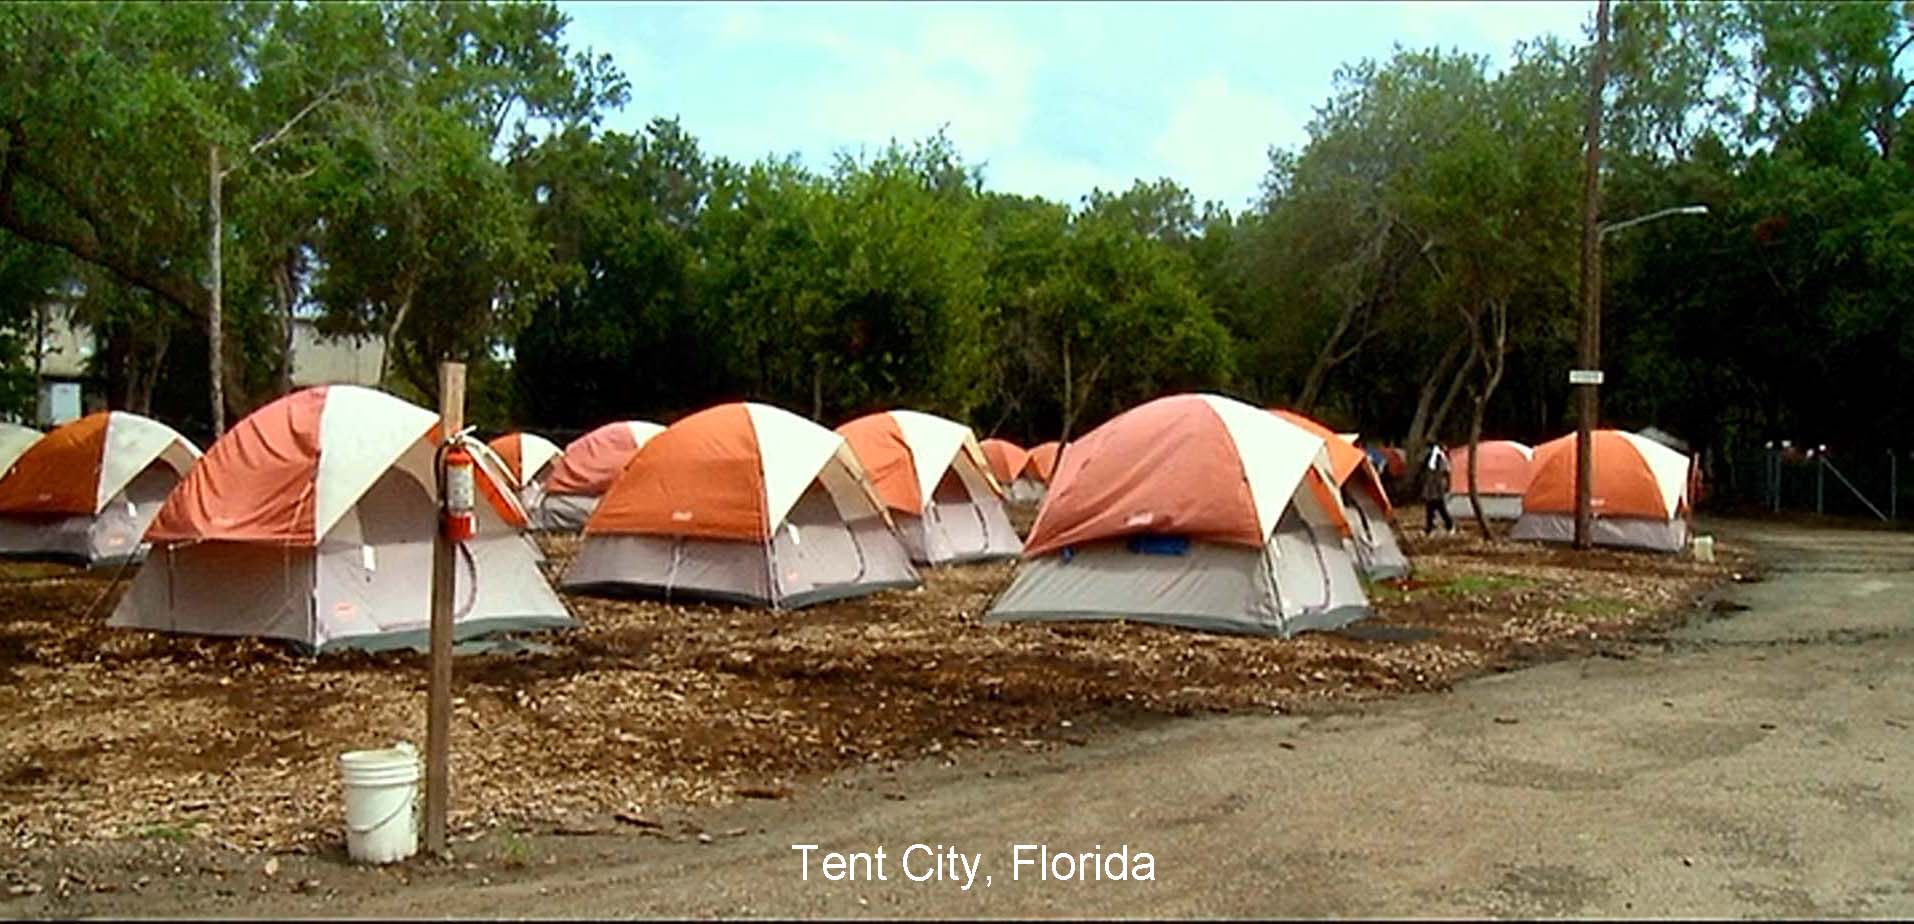 Tent City, Florida